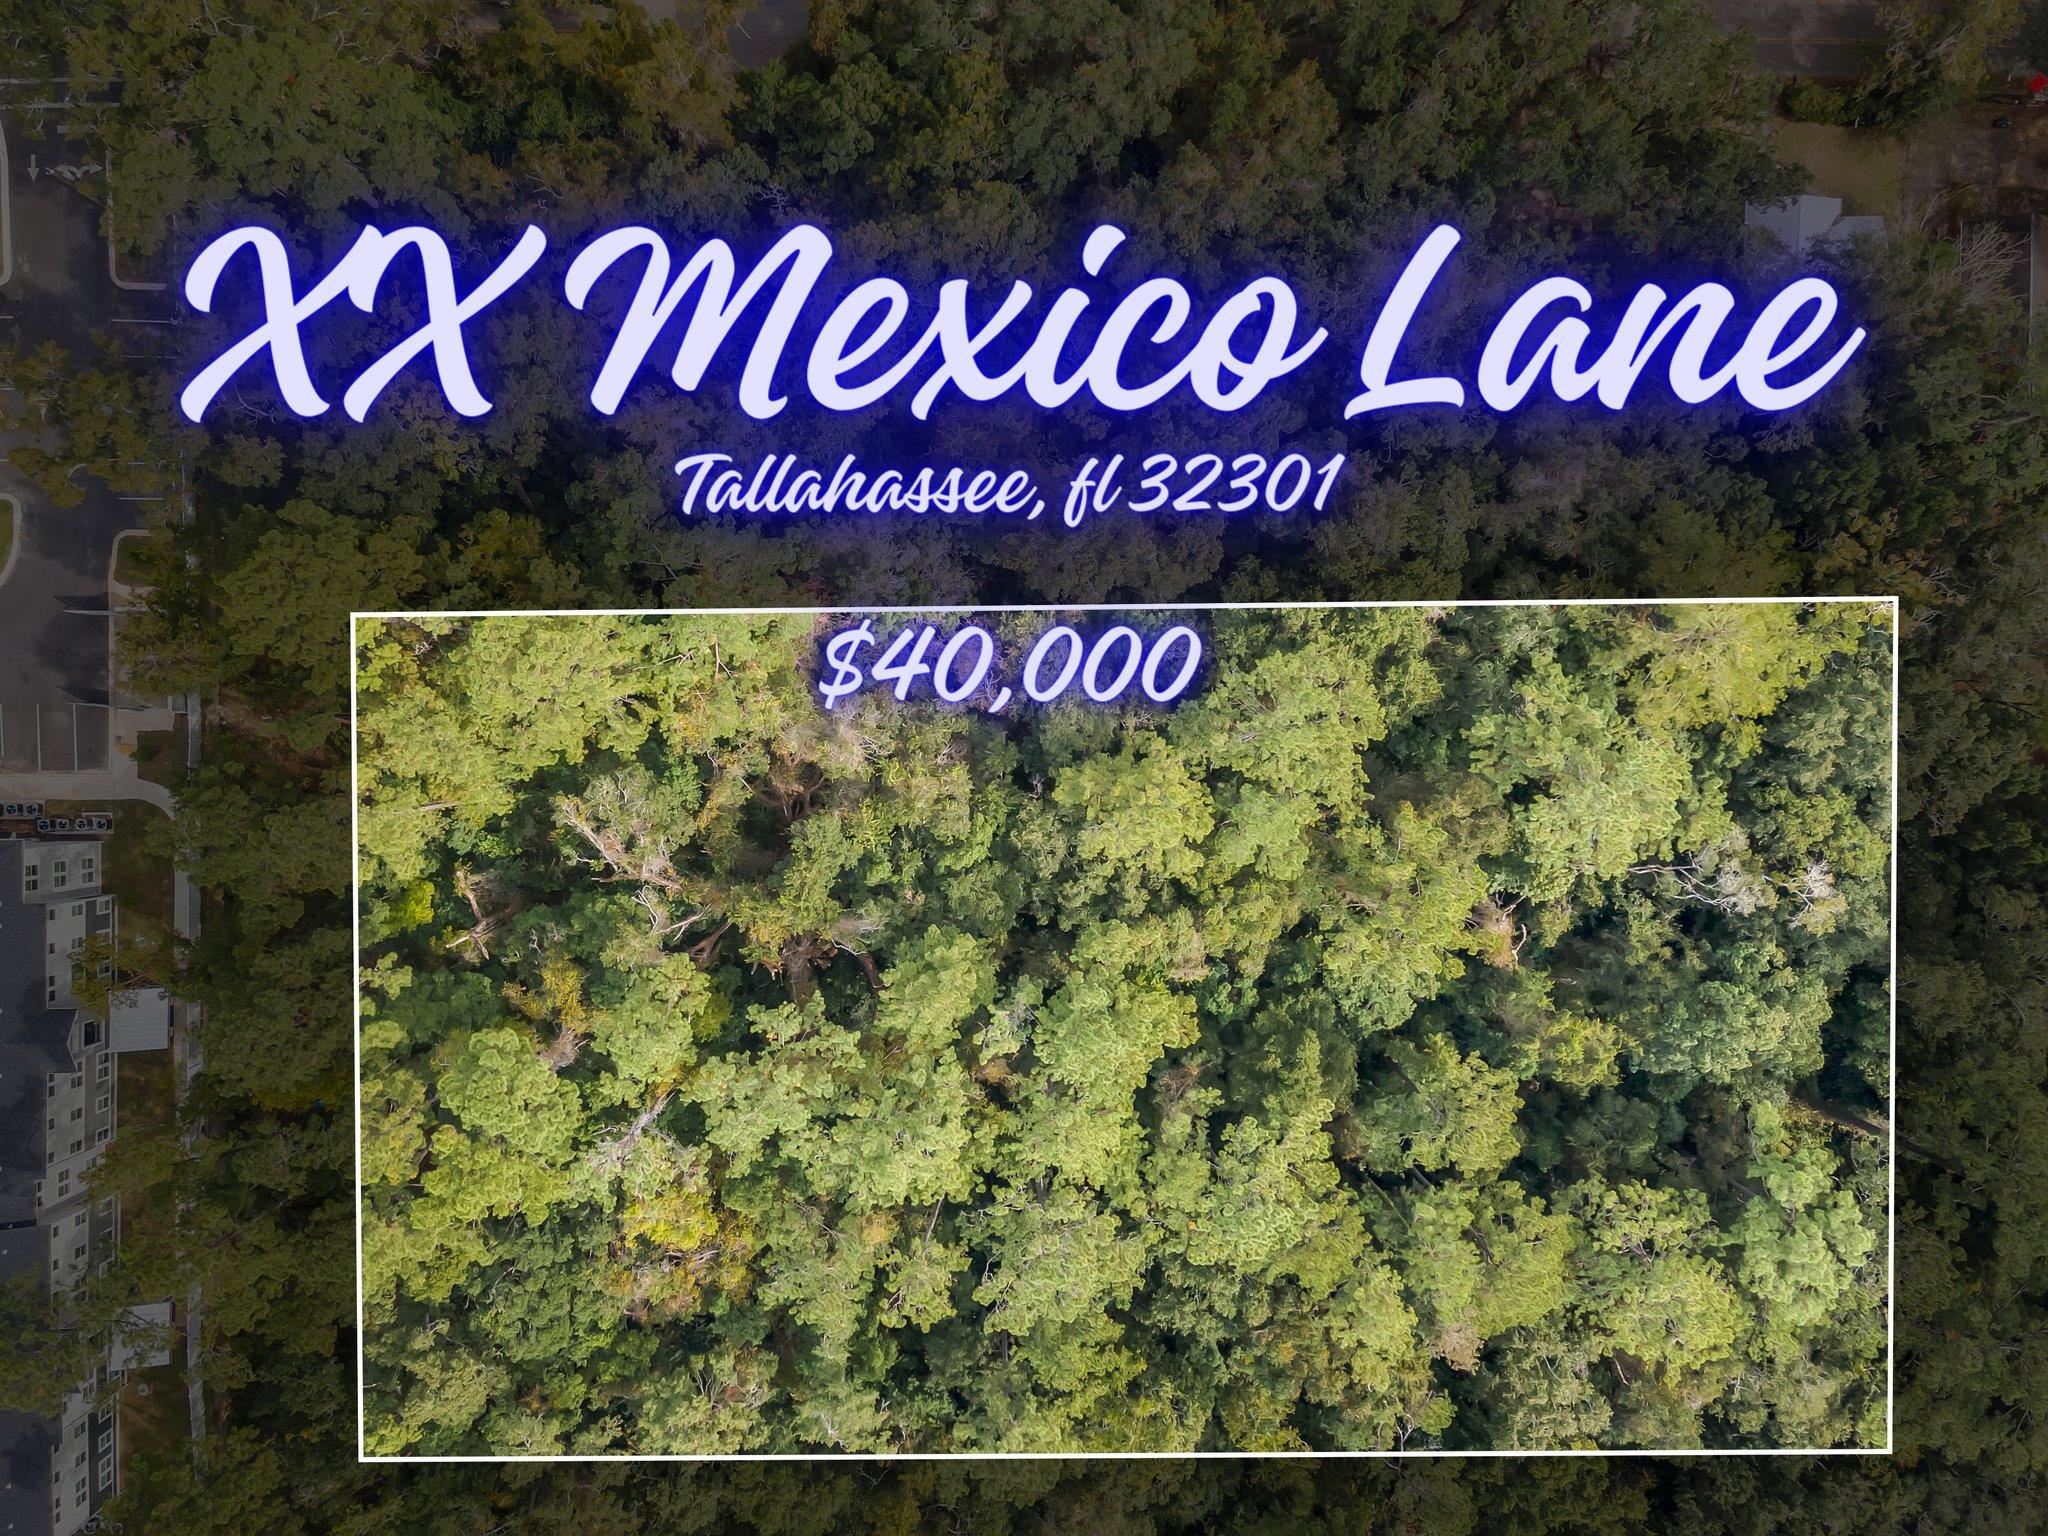 XXX Mexico Lane,TALLAHASSEE,Florida 32301,Lots and land,Mexico Lane,364863